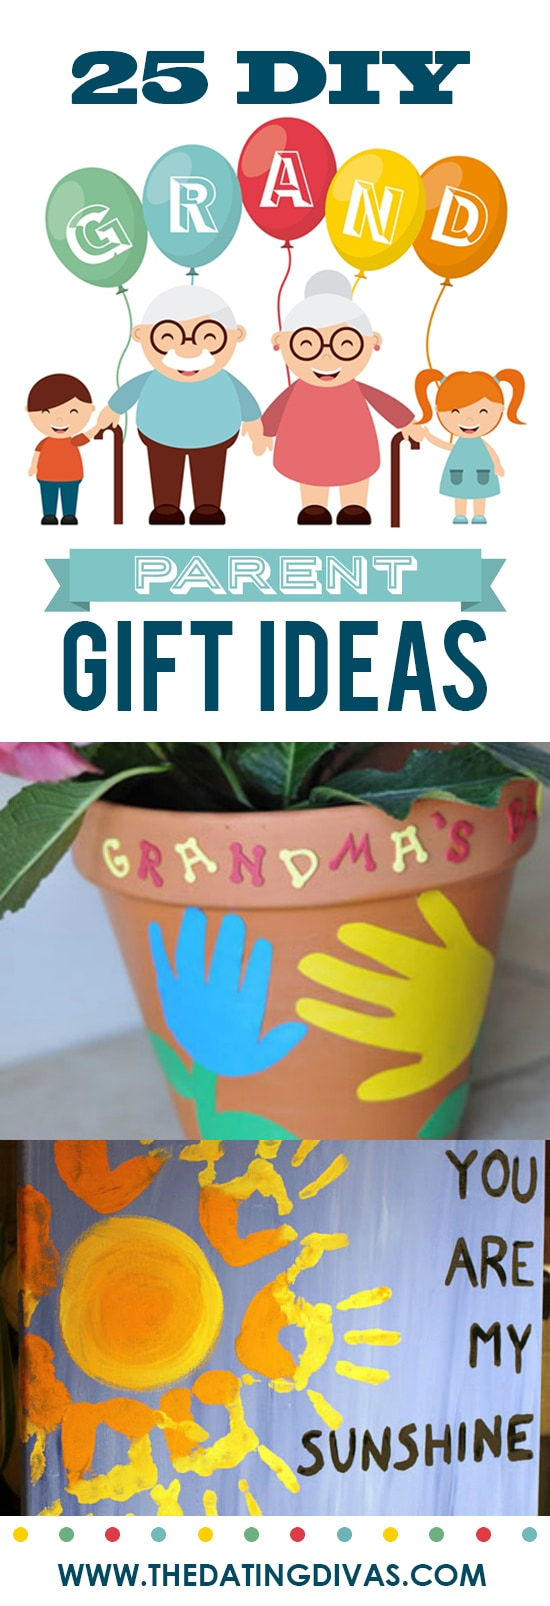 Birthday Card Ideas For Grandpa 95 Diy Birthday Gifts For Grandma Homemade Birthday Cards For